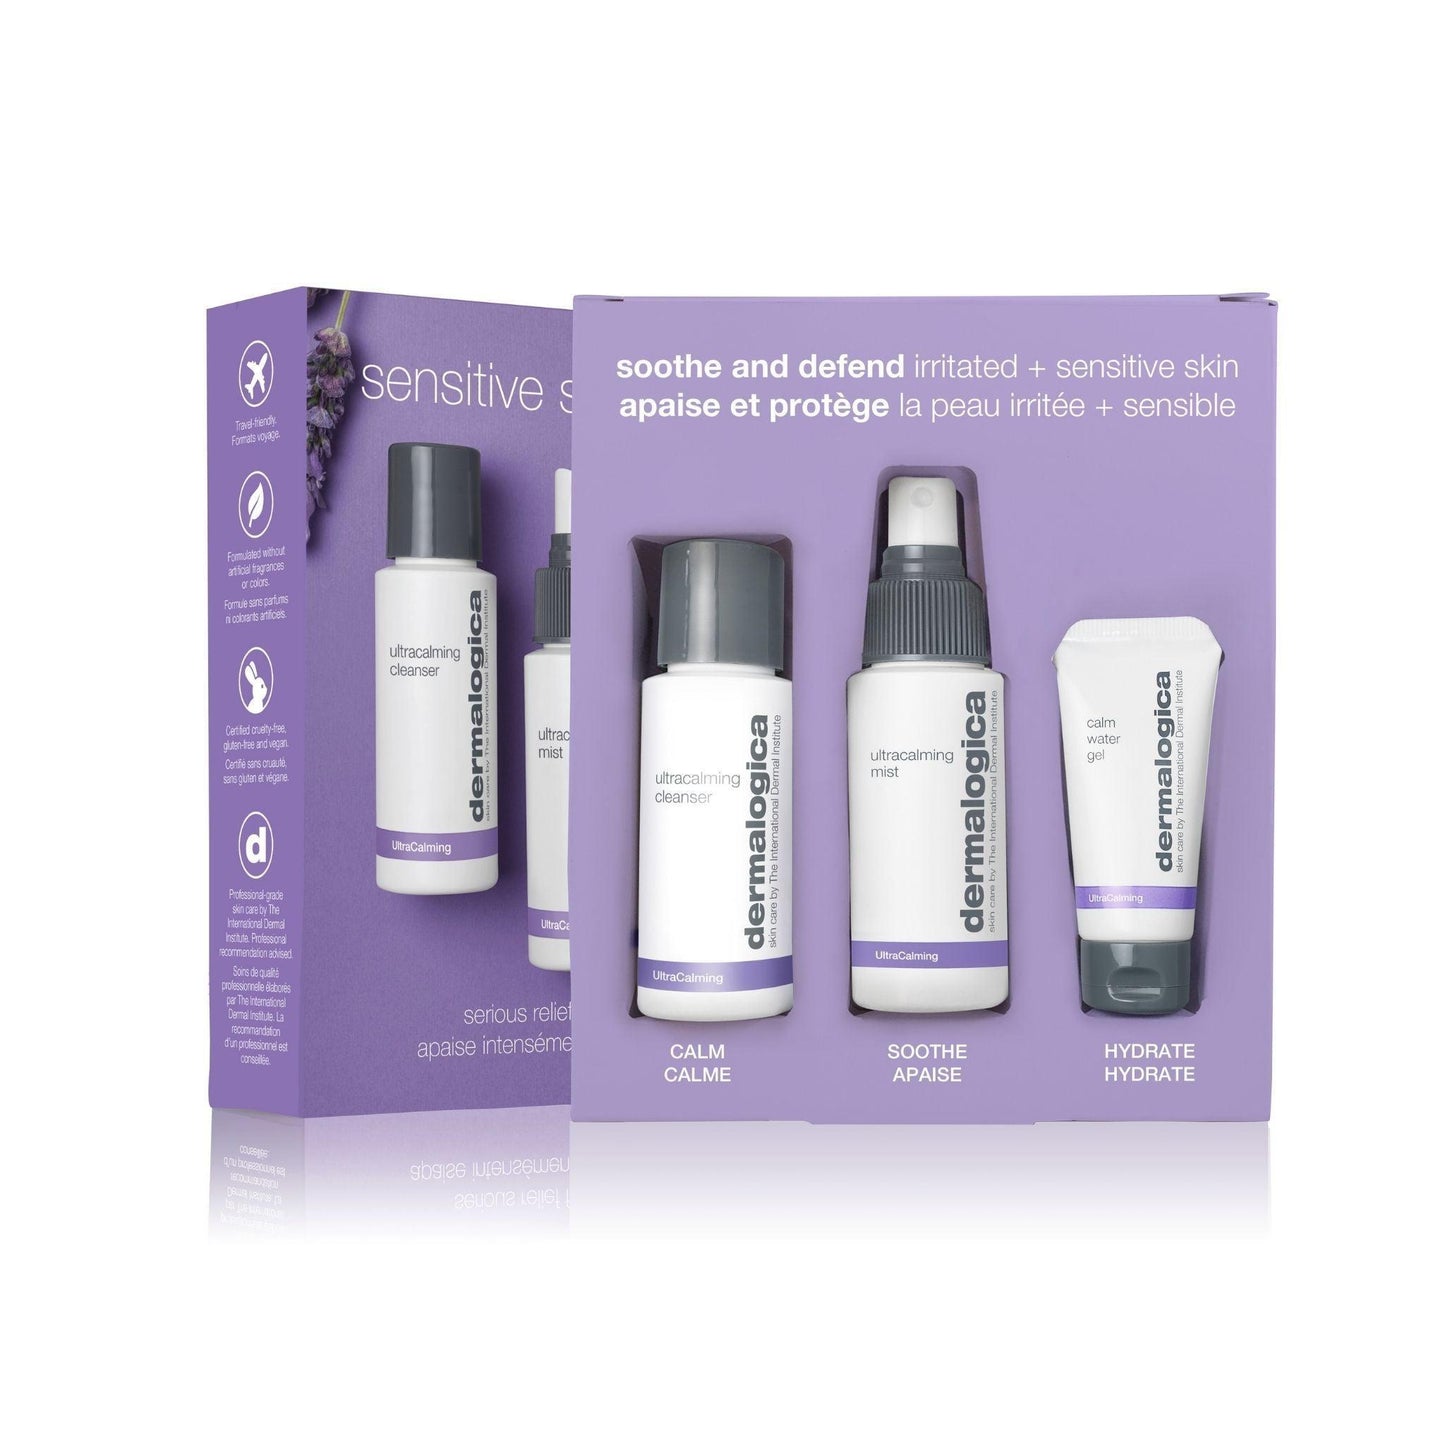 sensitive skin rescue kit - Dermalogica Malaysia